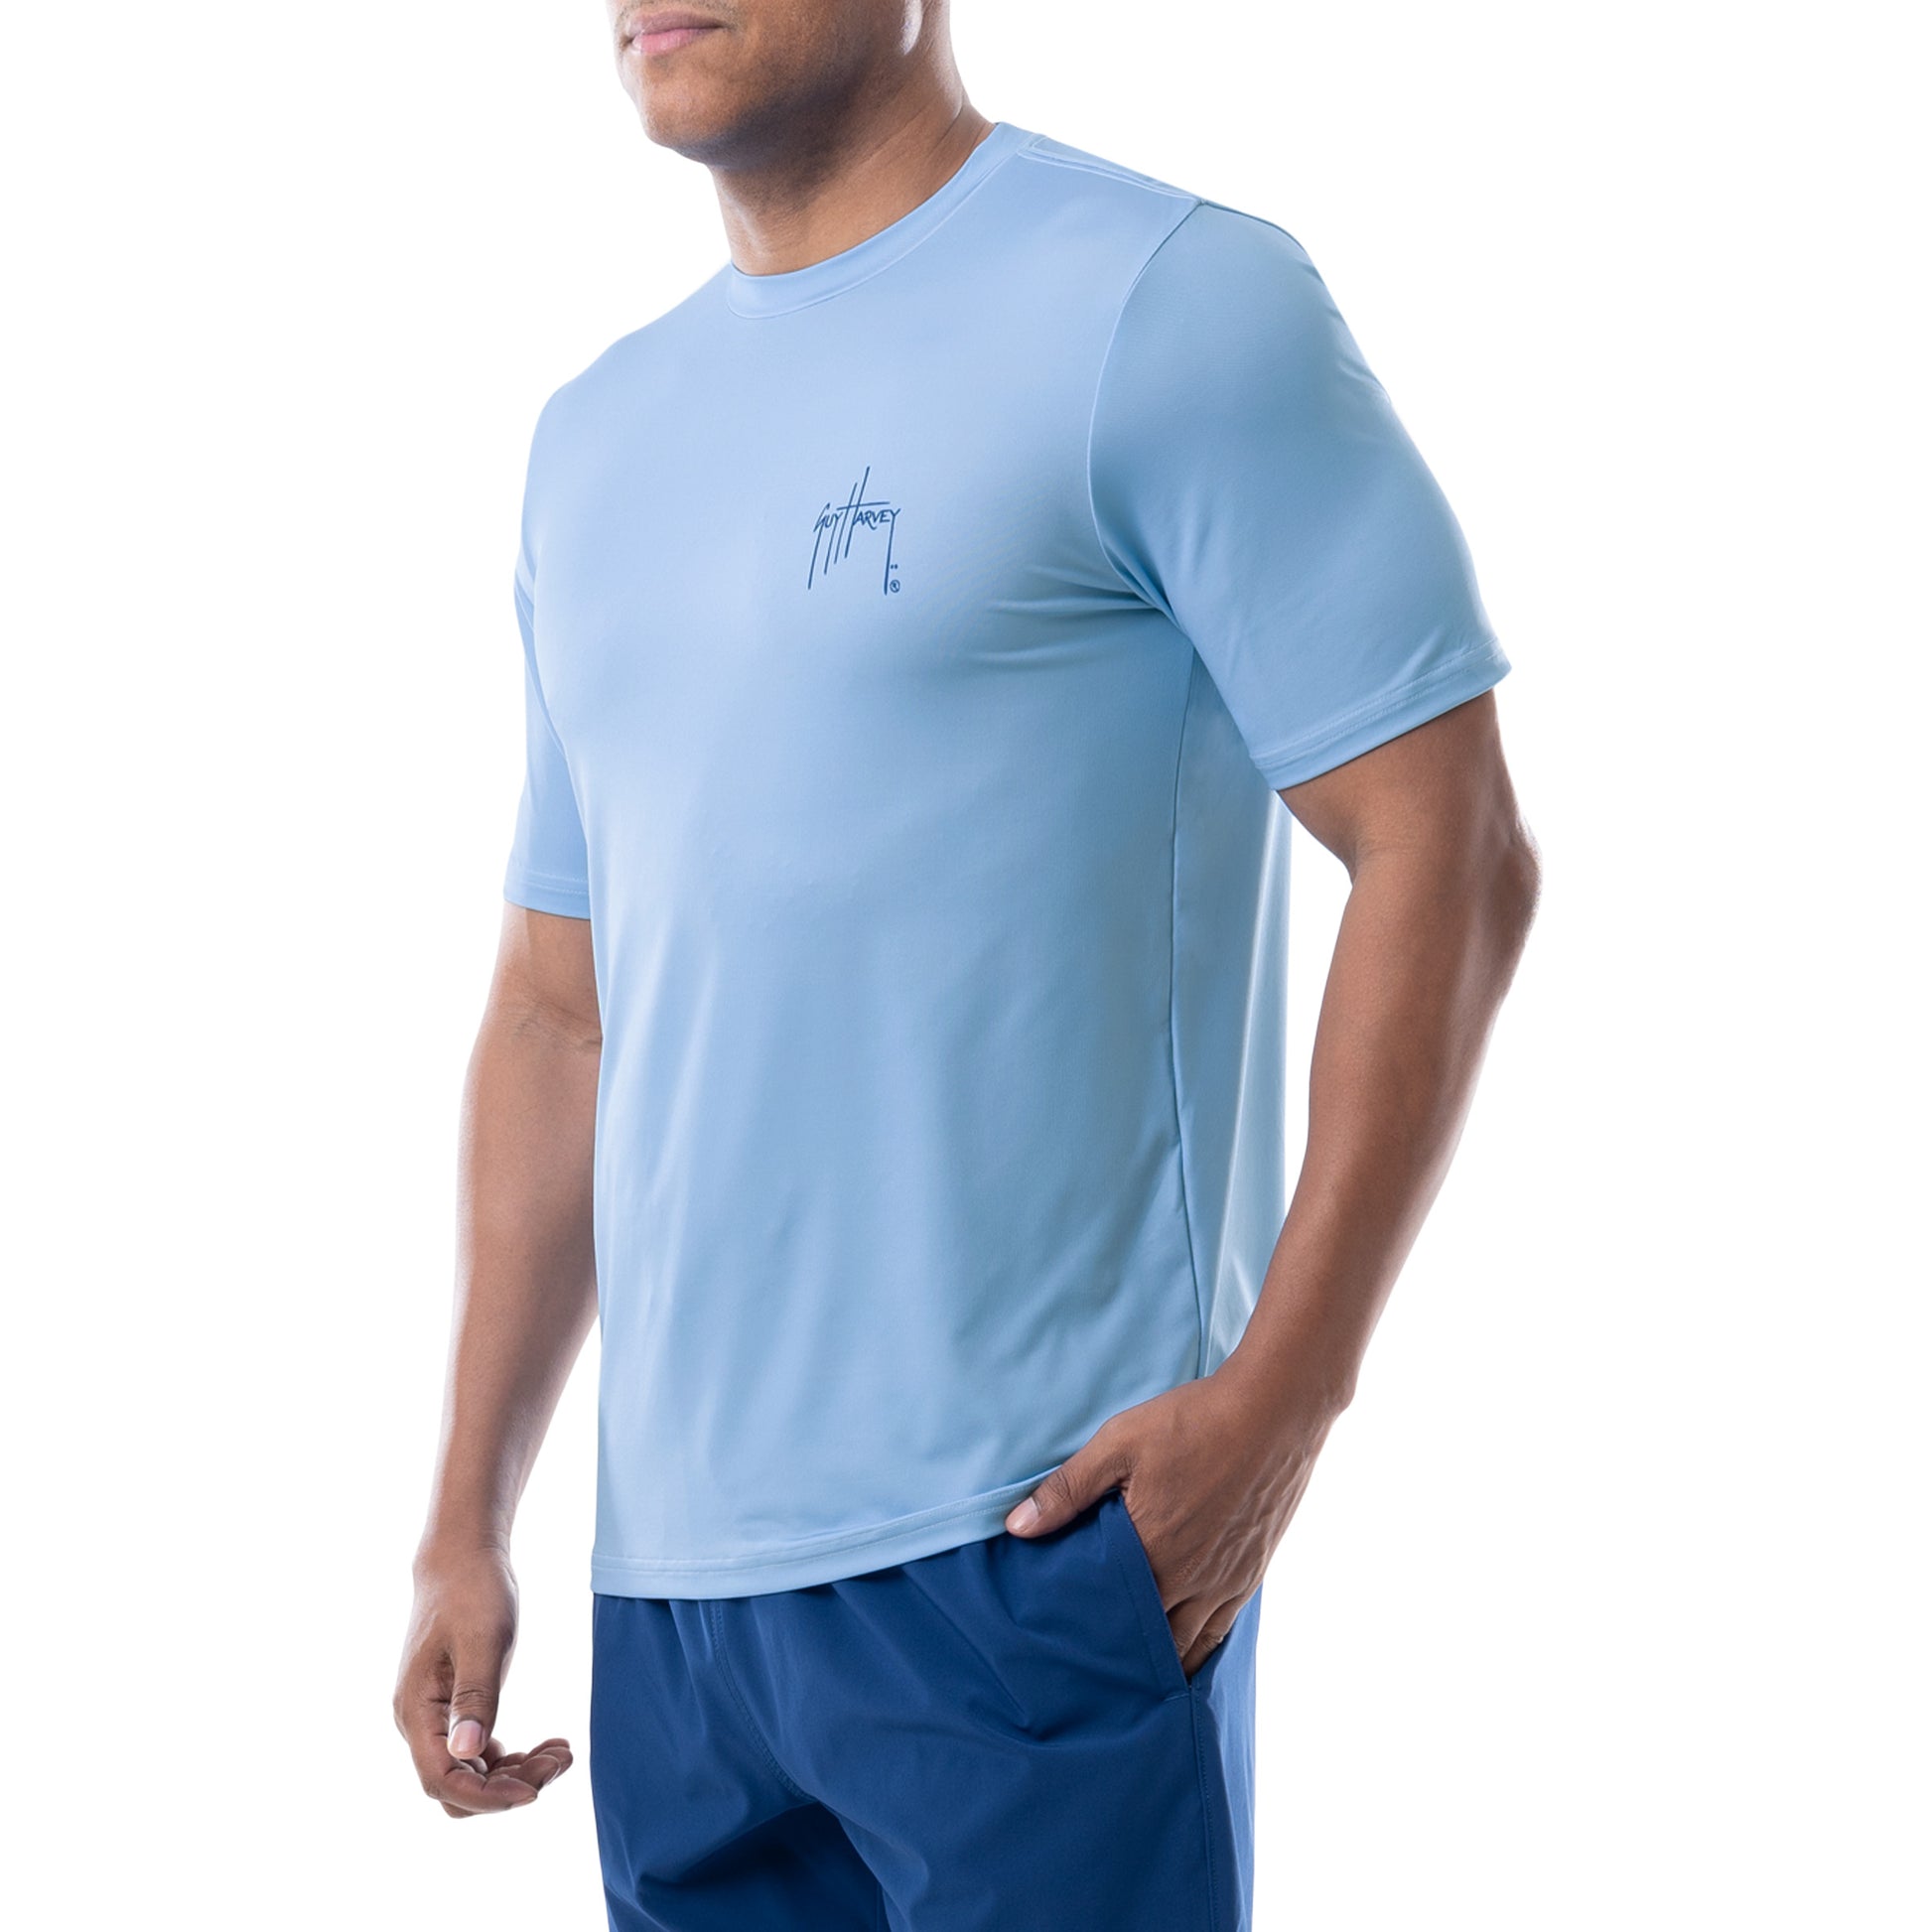 Men's Classic Blue Marlin Short Sleeve Performance Shirt View 4